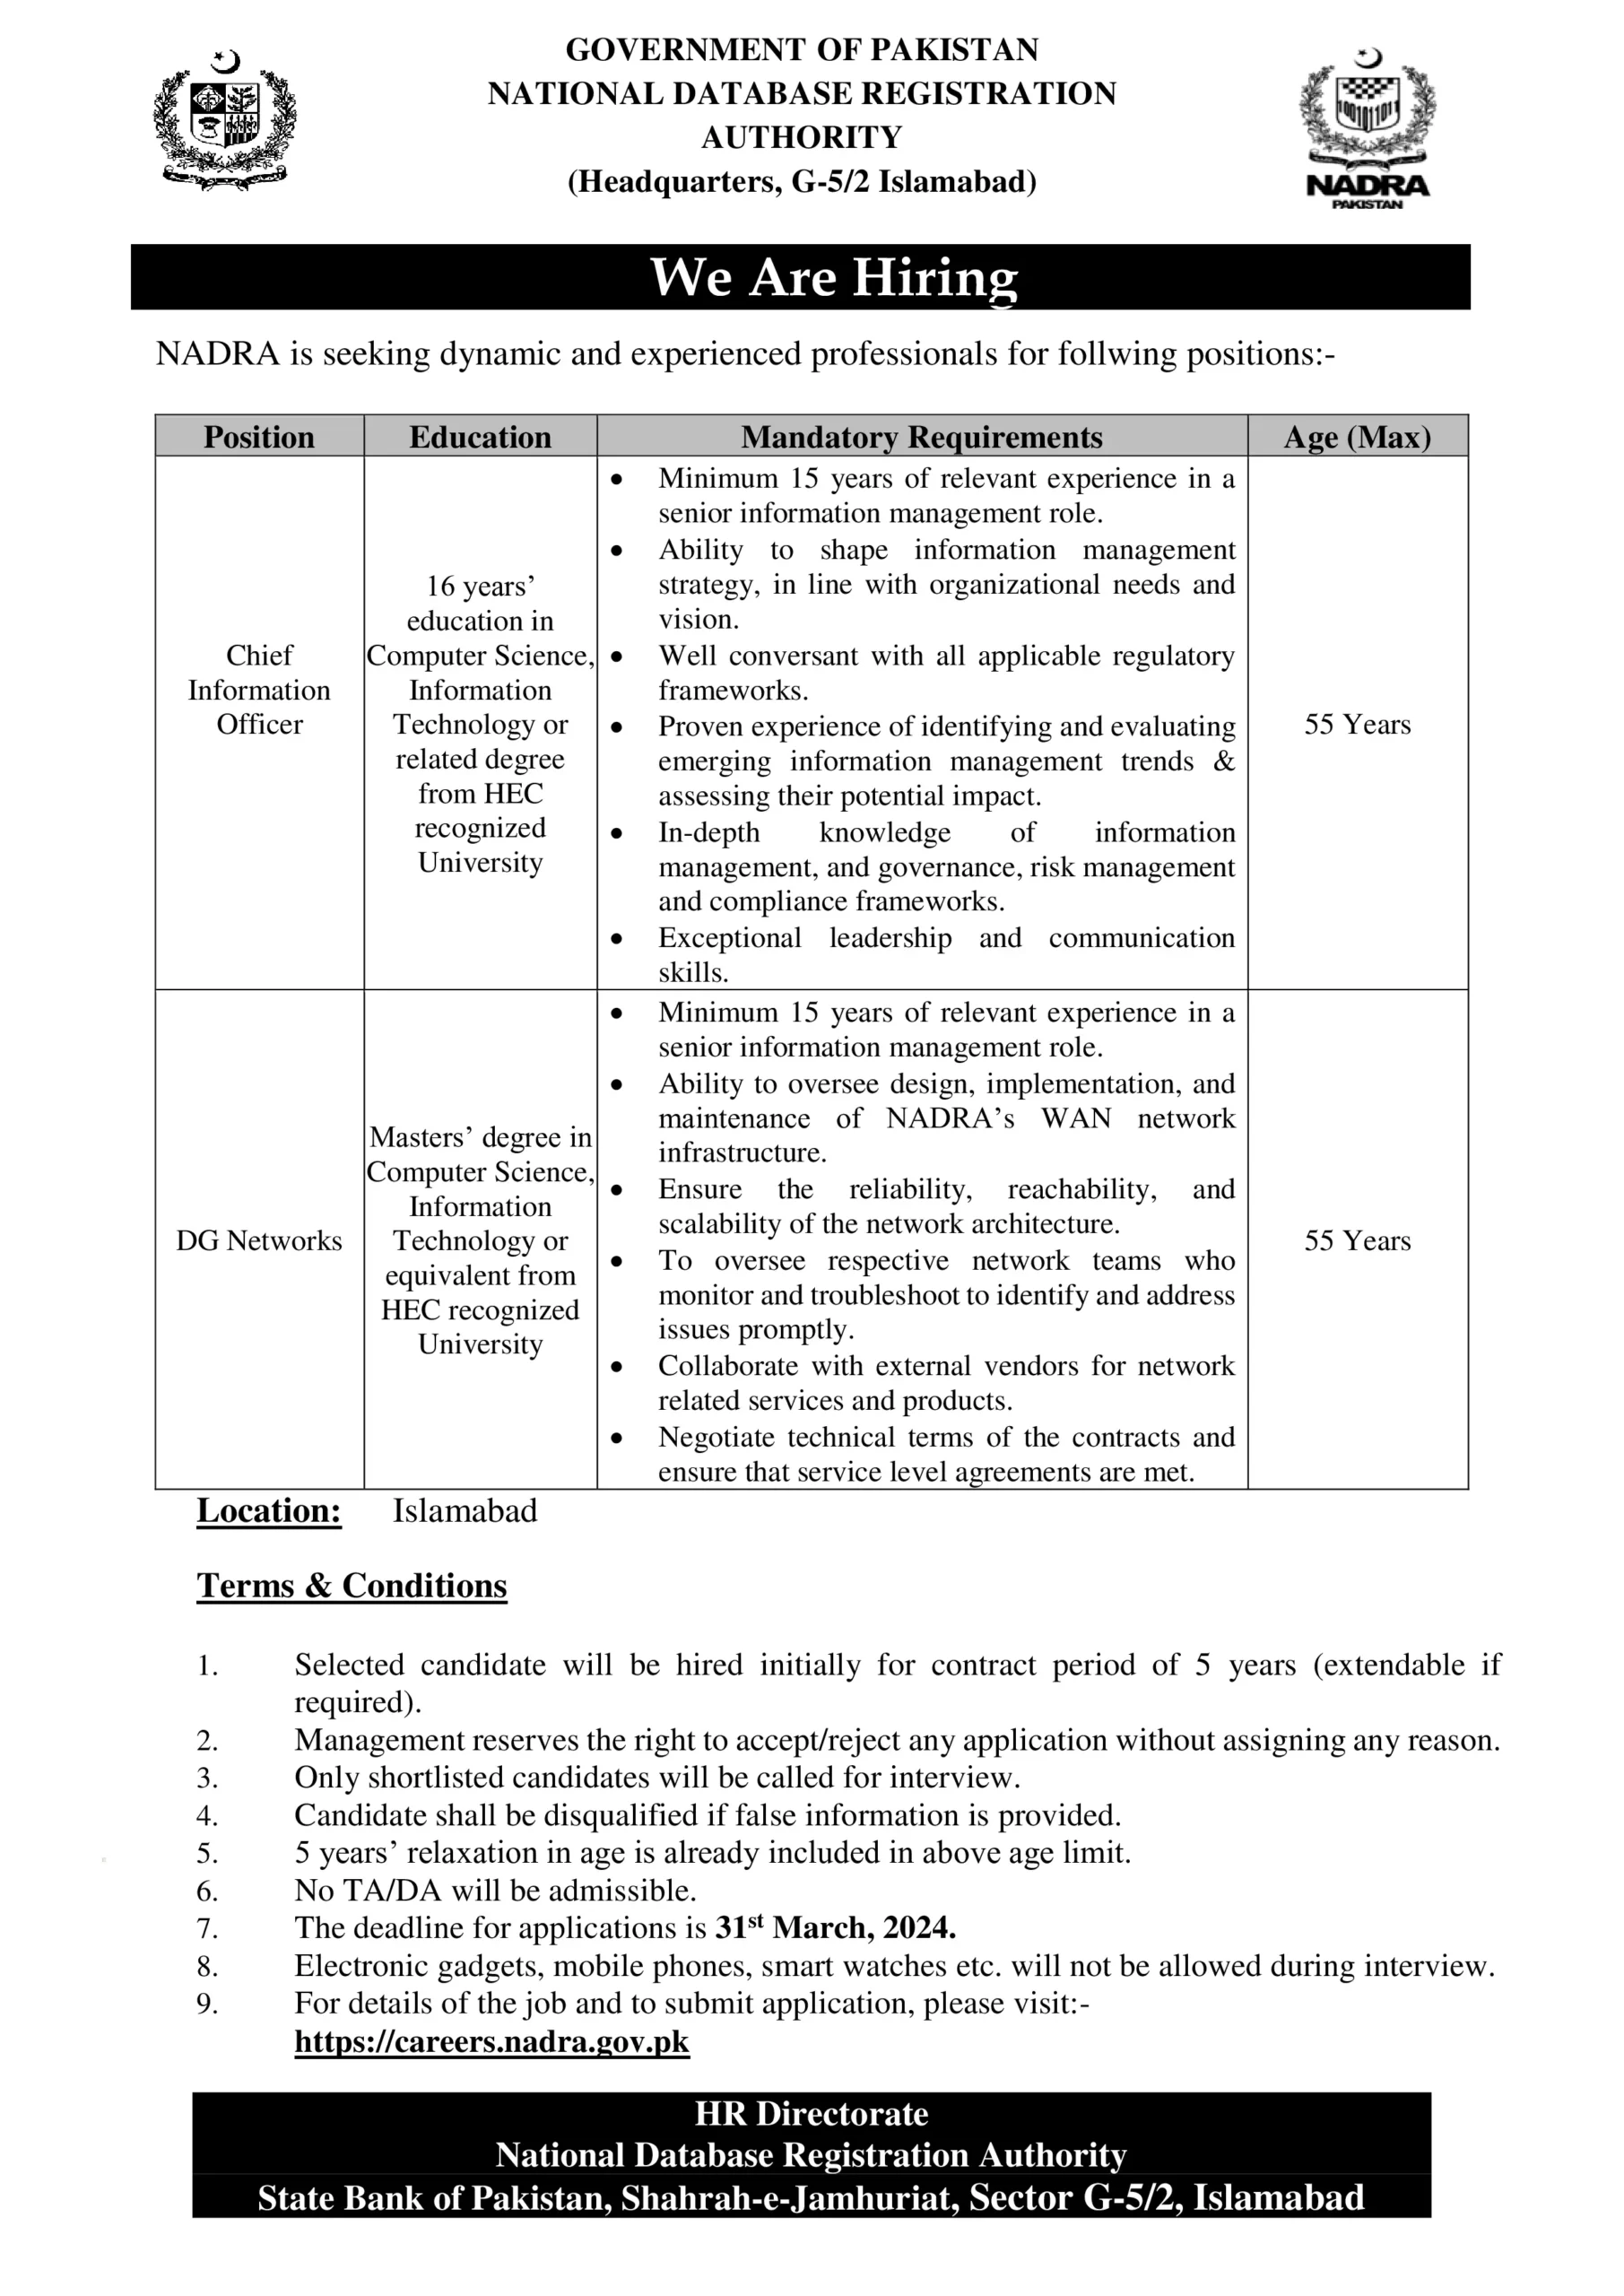 NADRA Jobs 2024 Apply Online at www.nadra.gov.pk